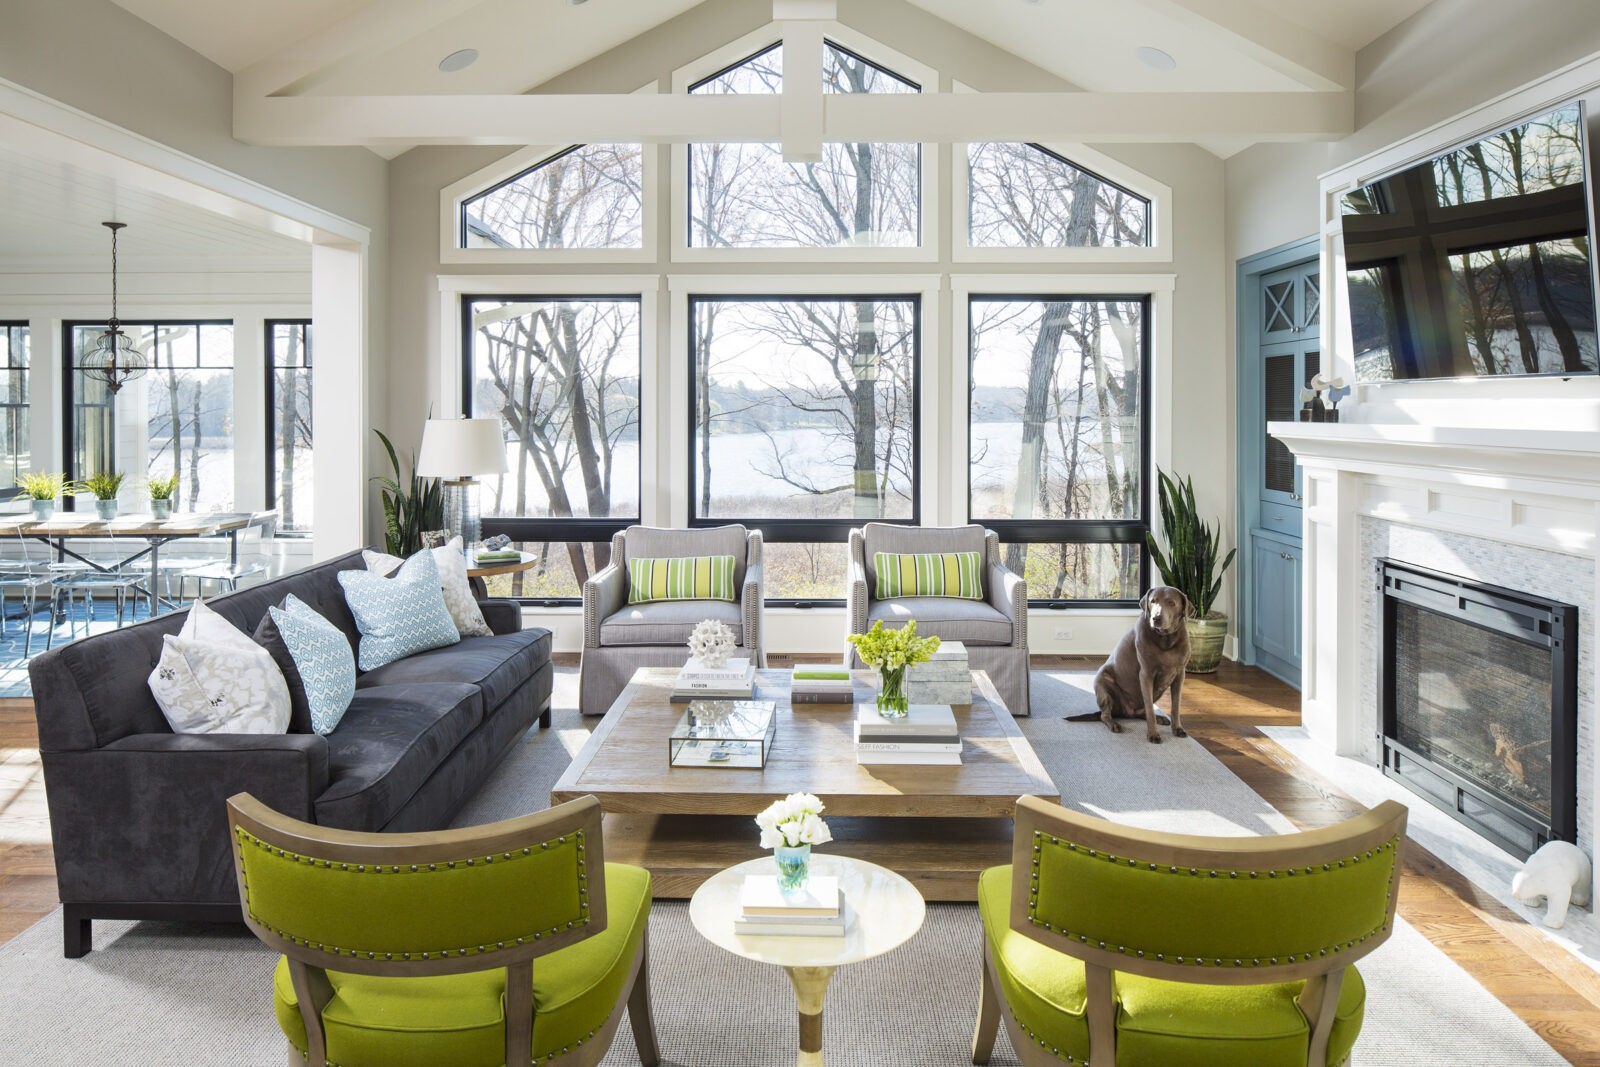 Great Love Home Interior Design Images Superb Home